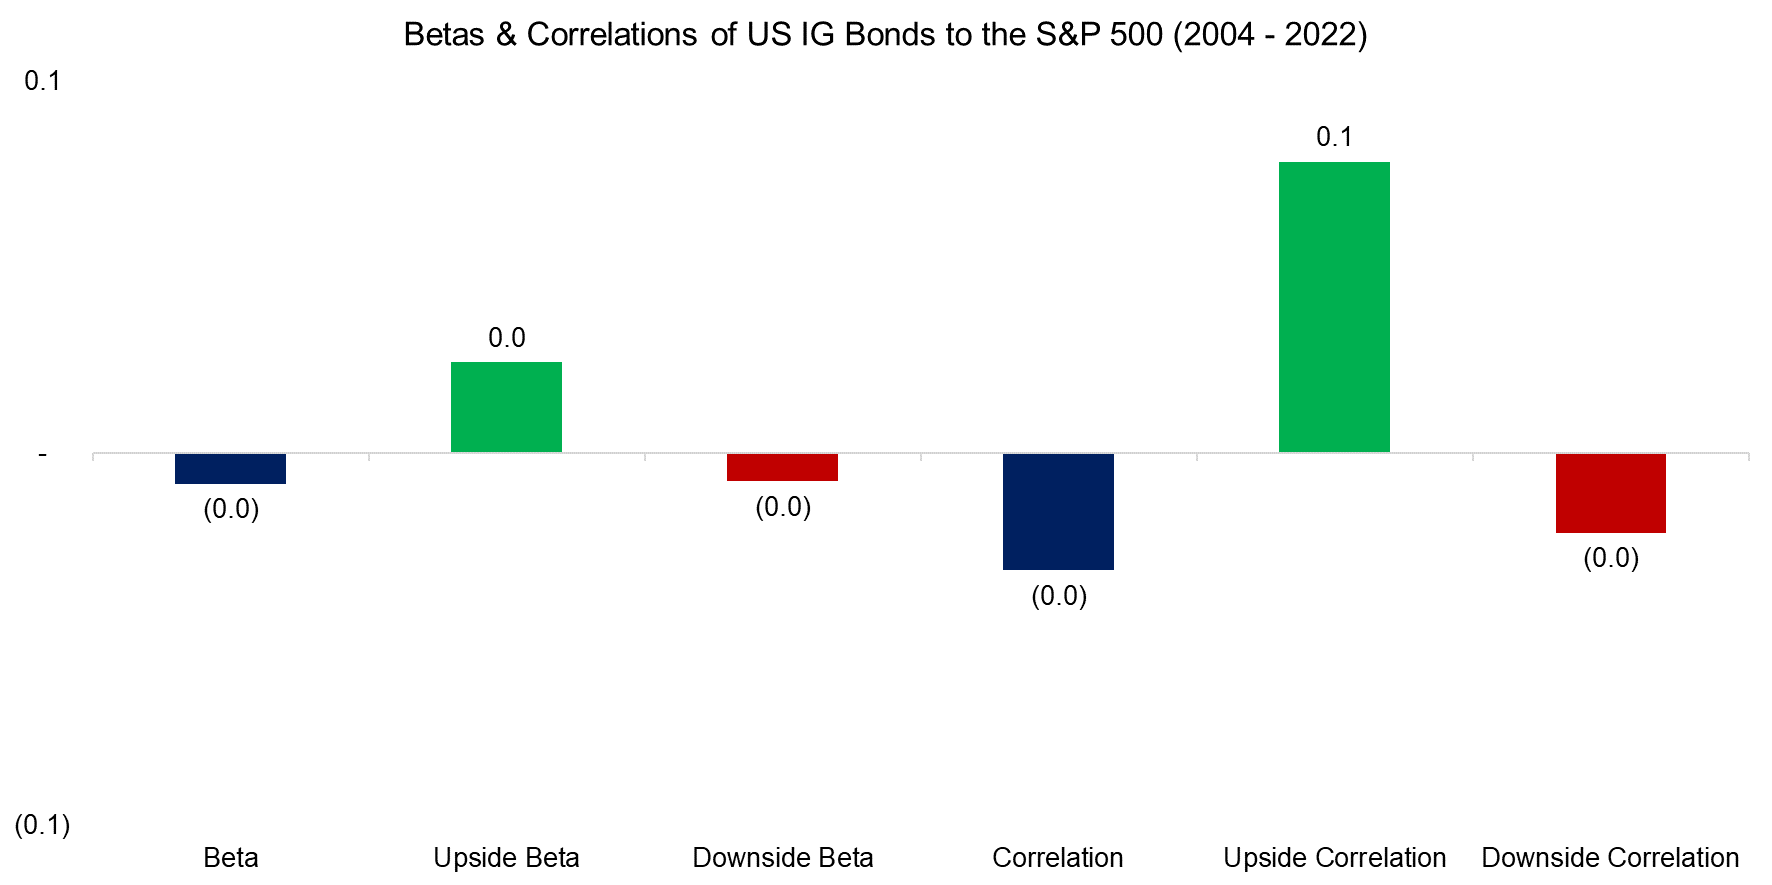 Betas-Correlations-of-US-IG-Bonds-to-the-SP-500-2004-2022y